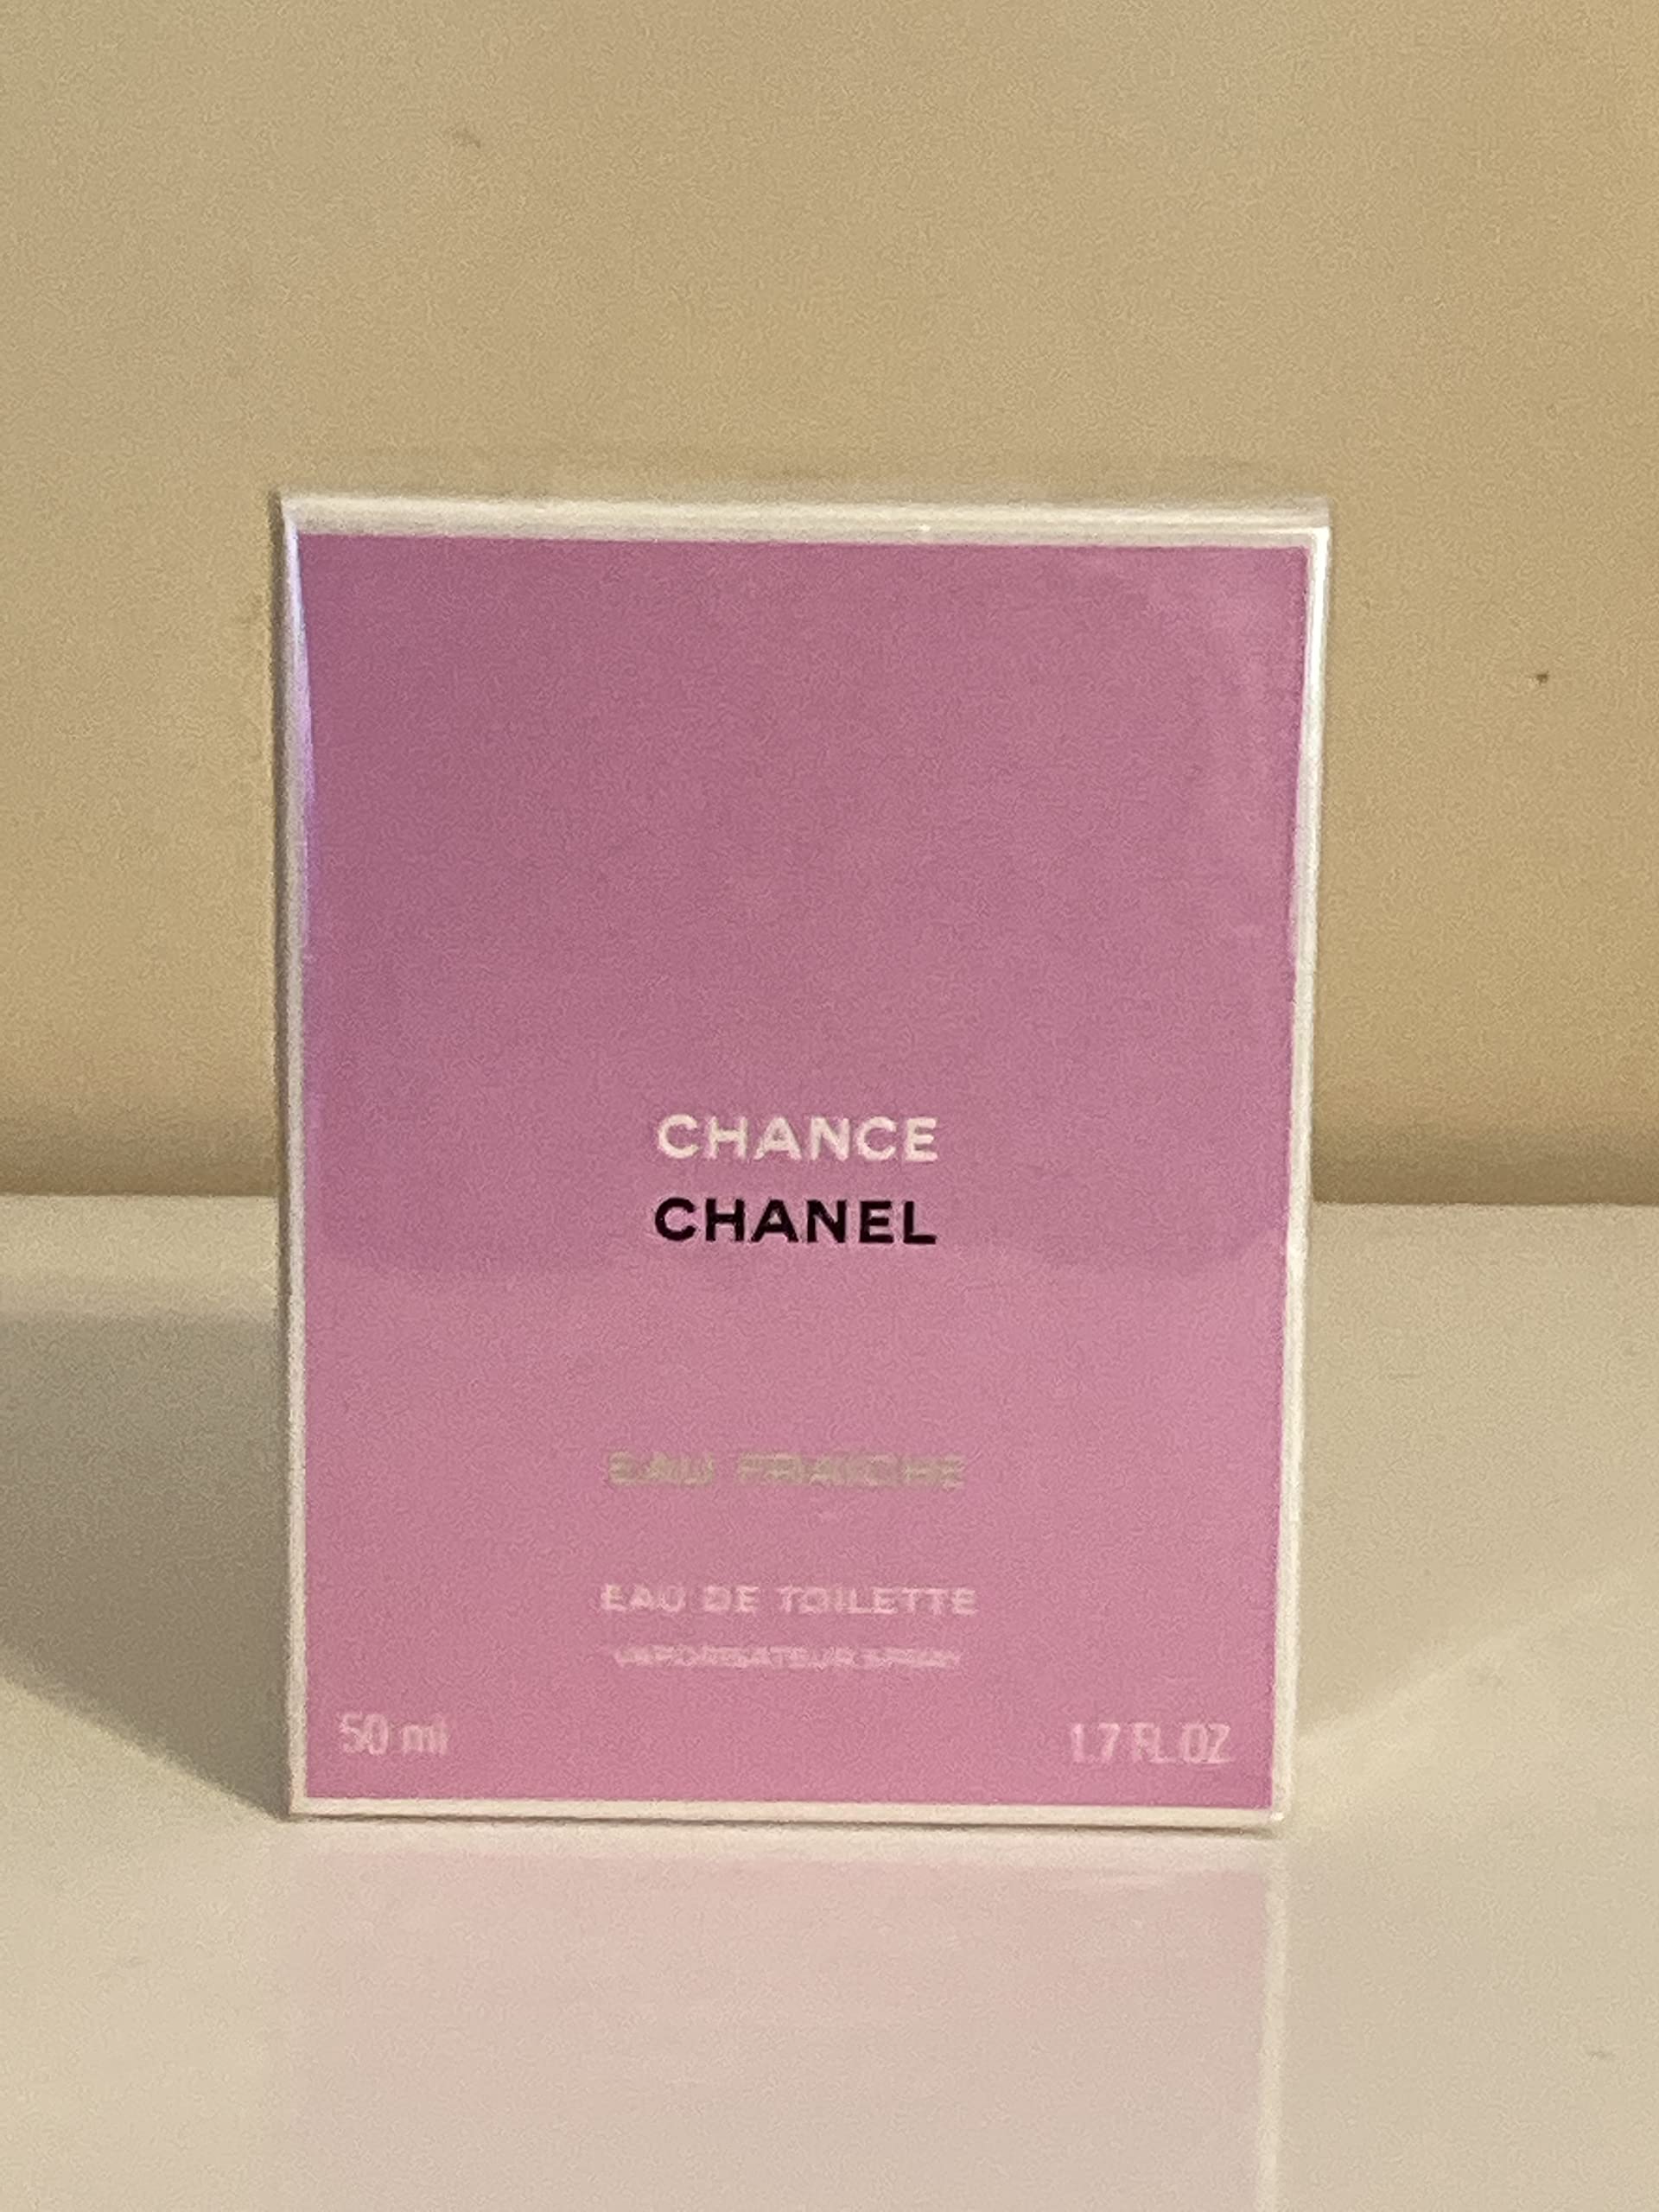 Chance Eau Fraiche Eau De Toilette Spray 50ml/1.7oz 1.7 Fl Oz (Pack of 1)